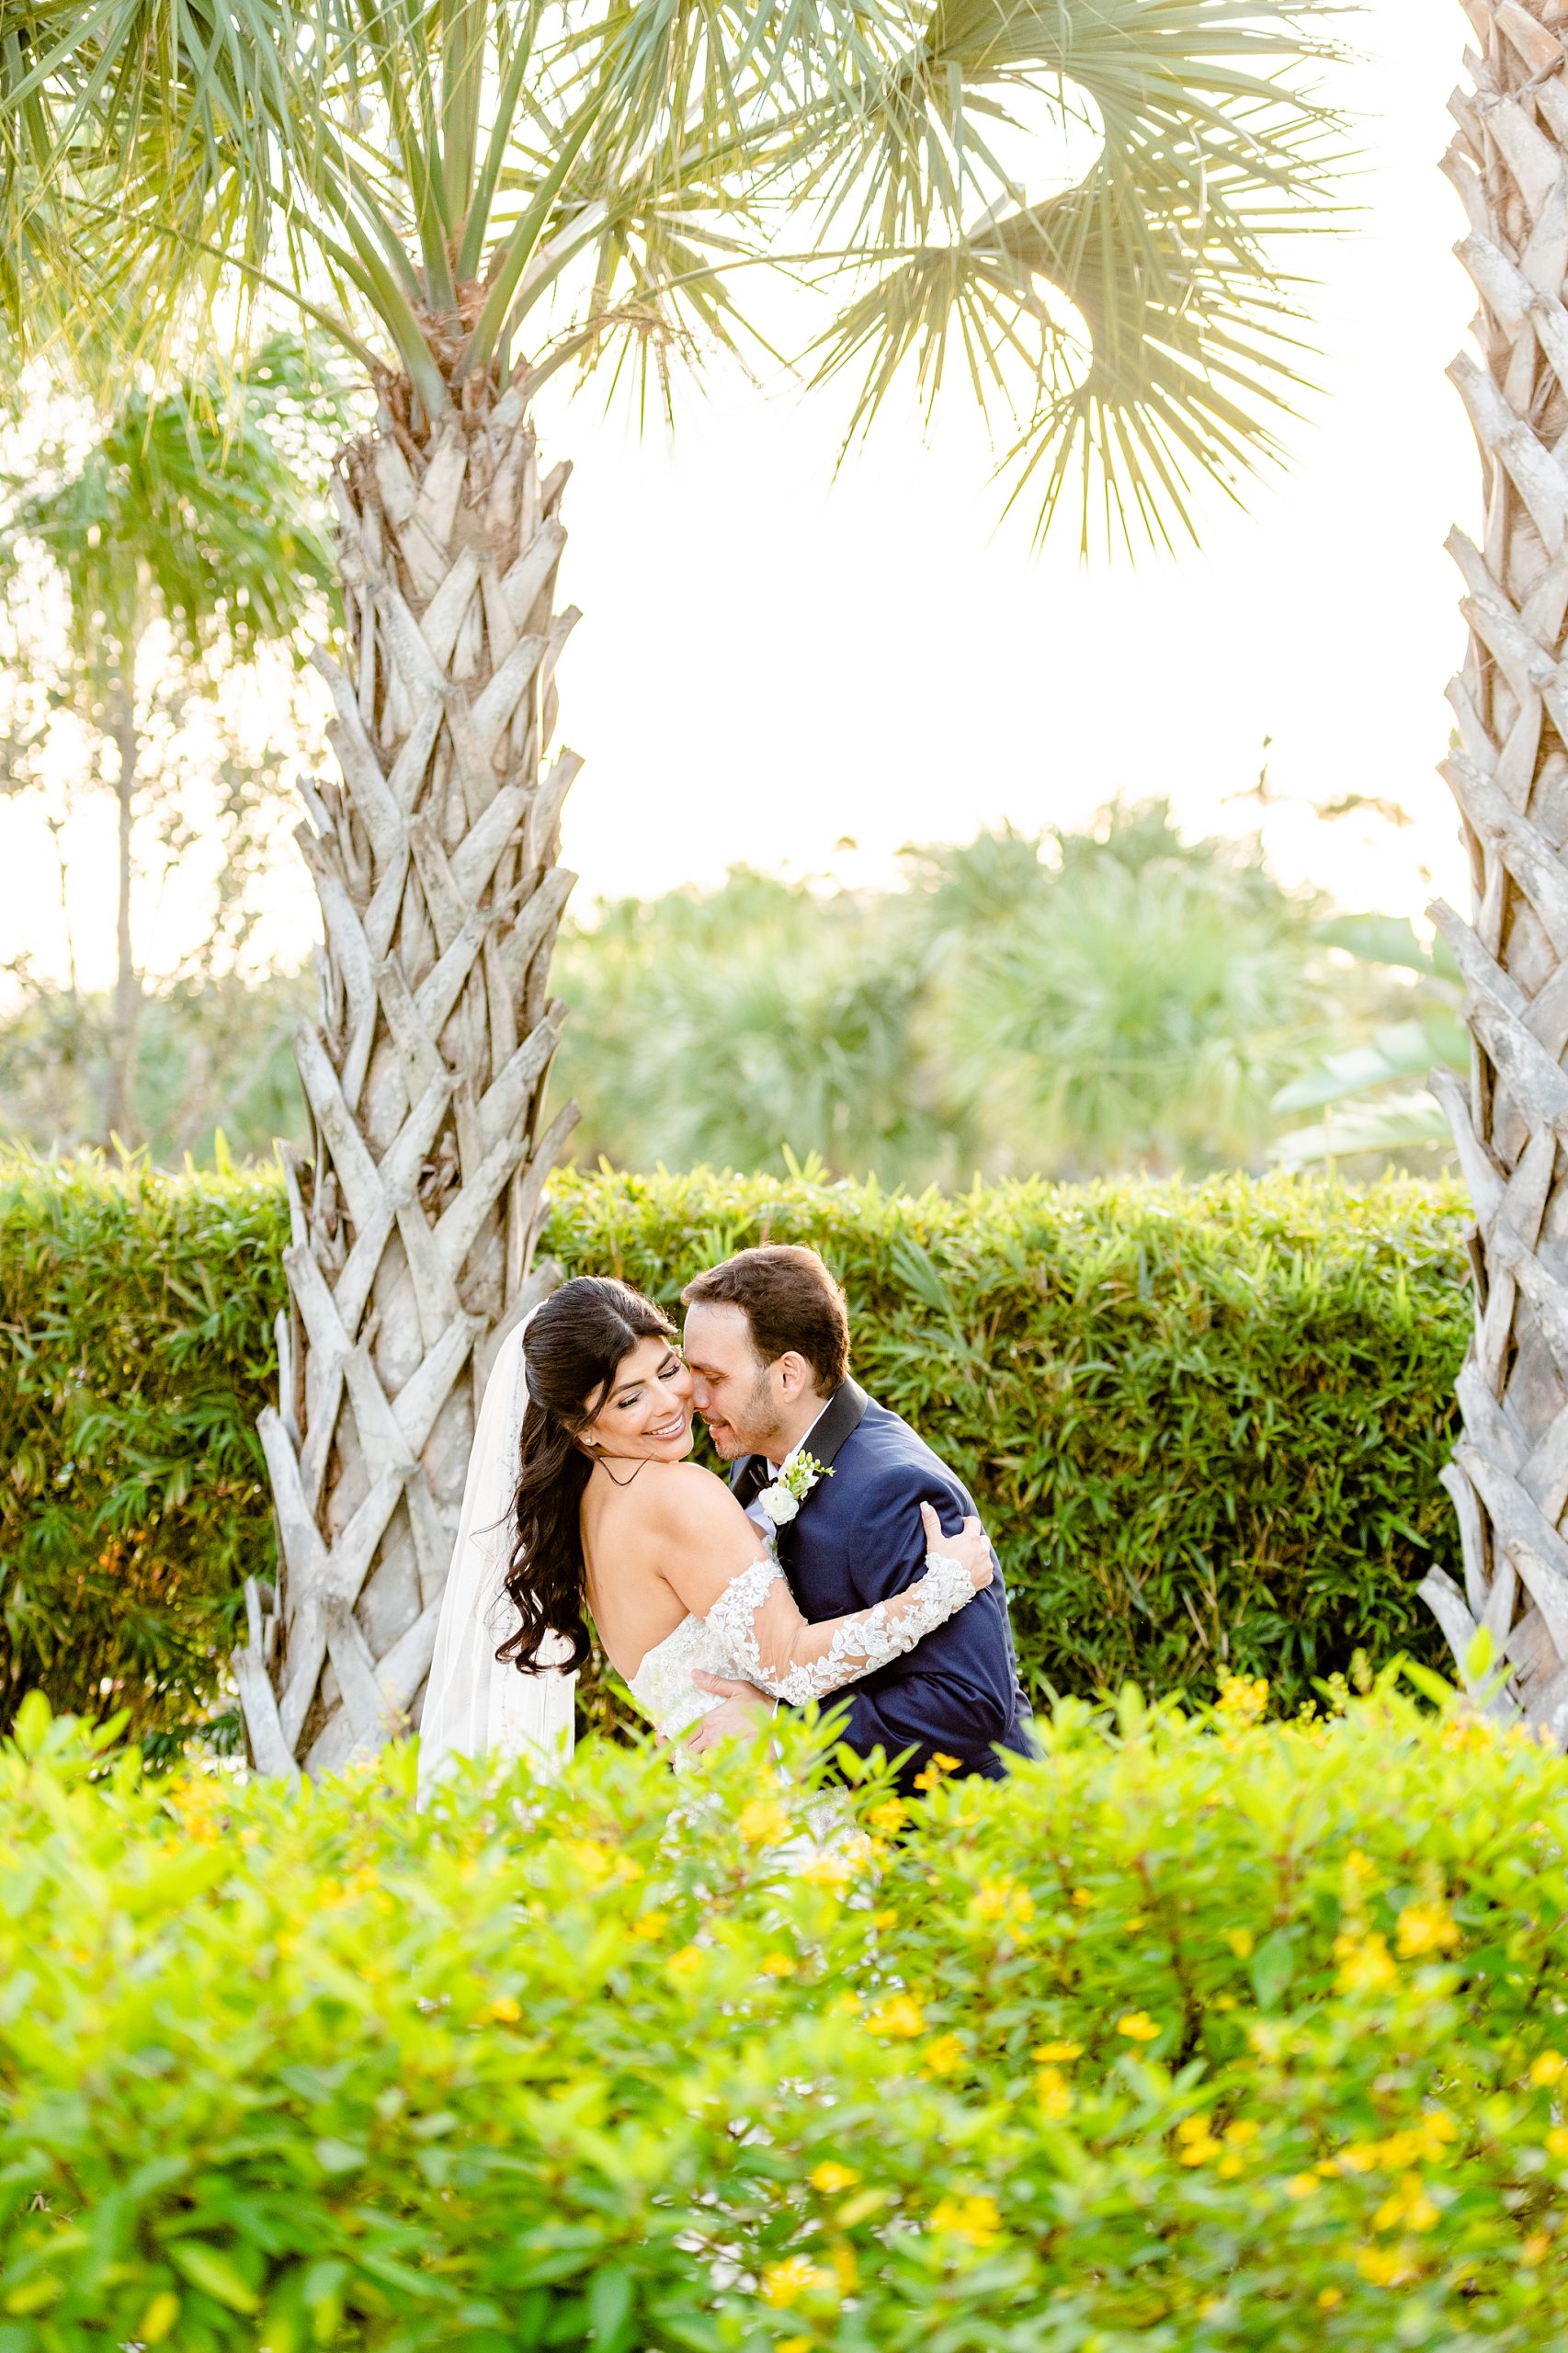 Orlando Wedding Photographer | Orlando Weddings